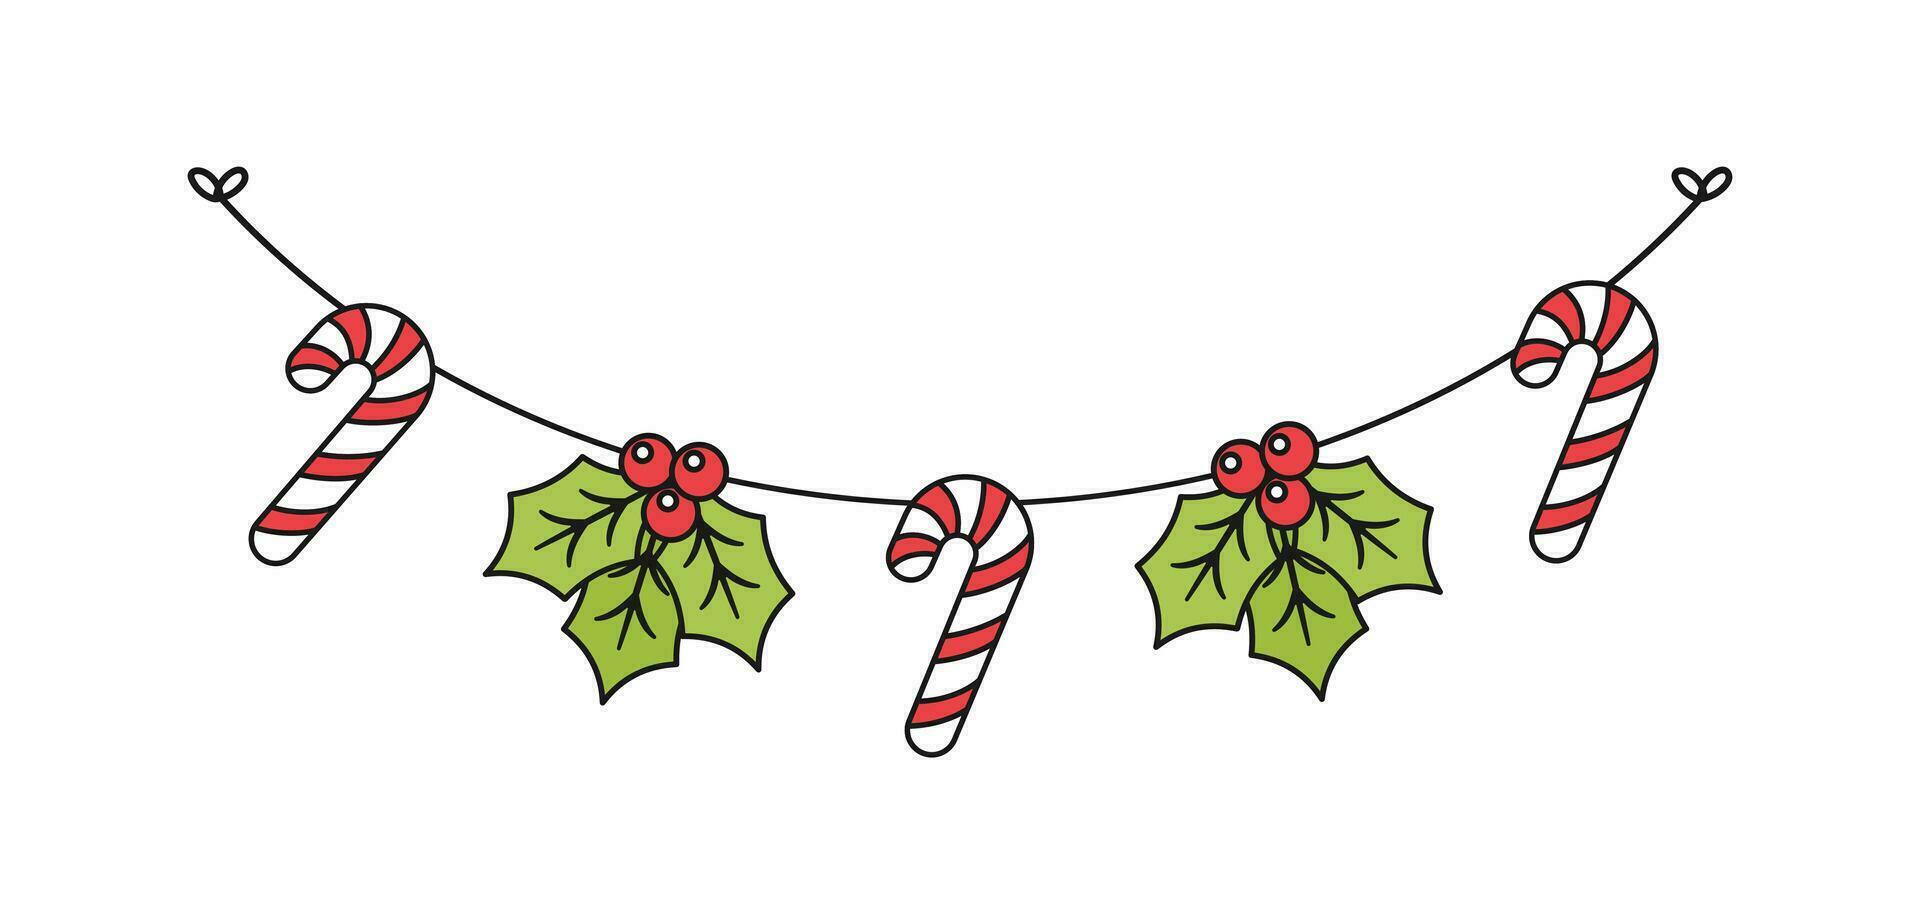 Mistletoe and Candy Cane Garland Vector Illustration, Christmas Graphics Festive Winter Holiday Season Bunting